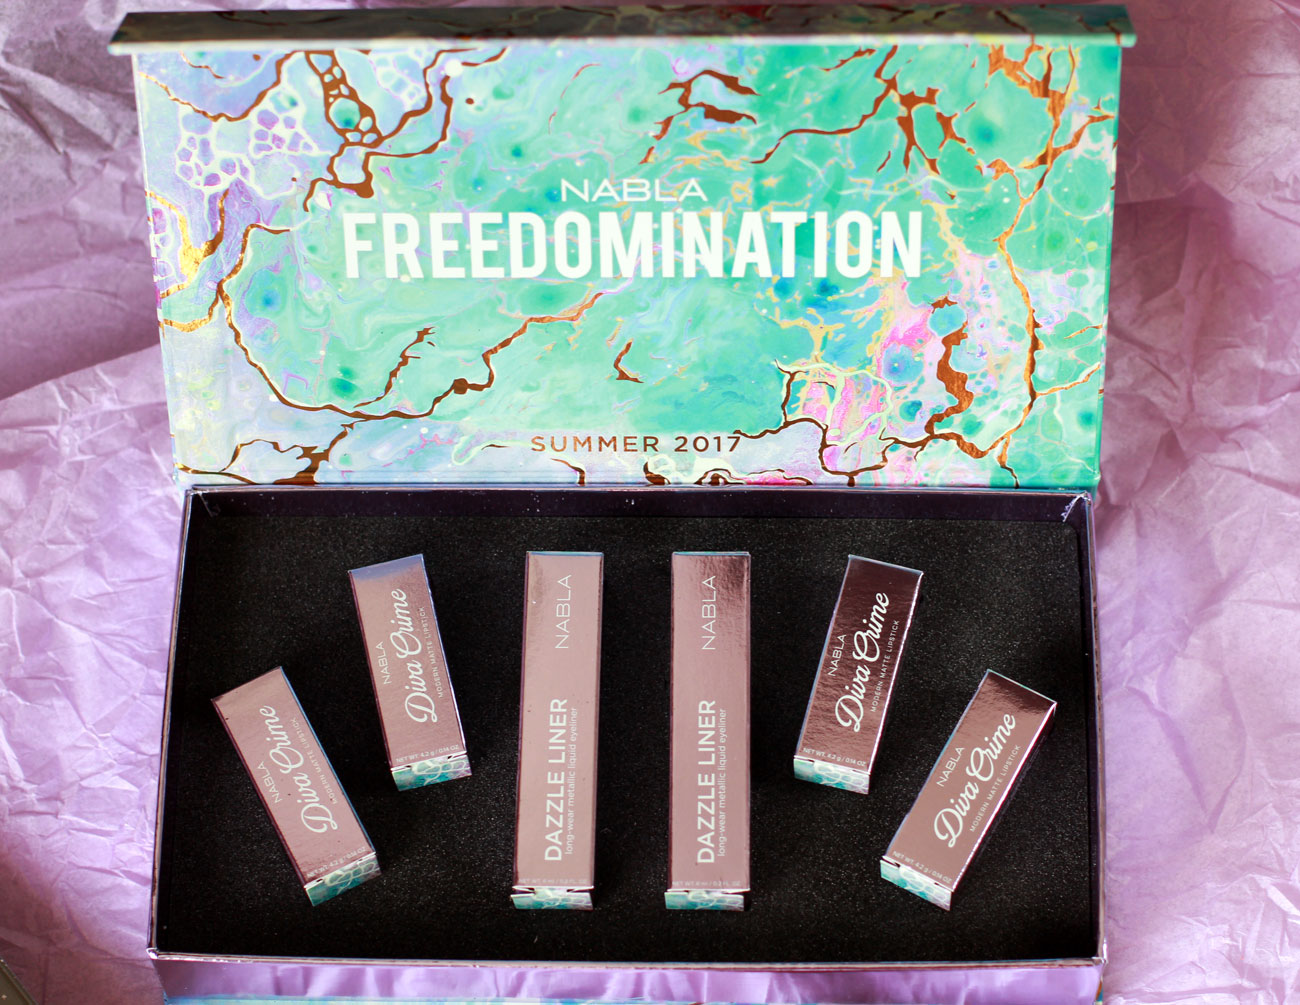 NABLA Freedomination Collection Box